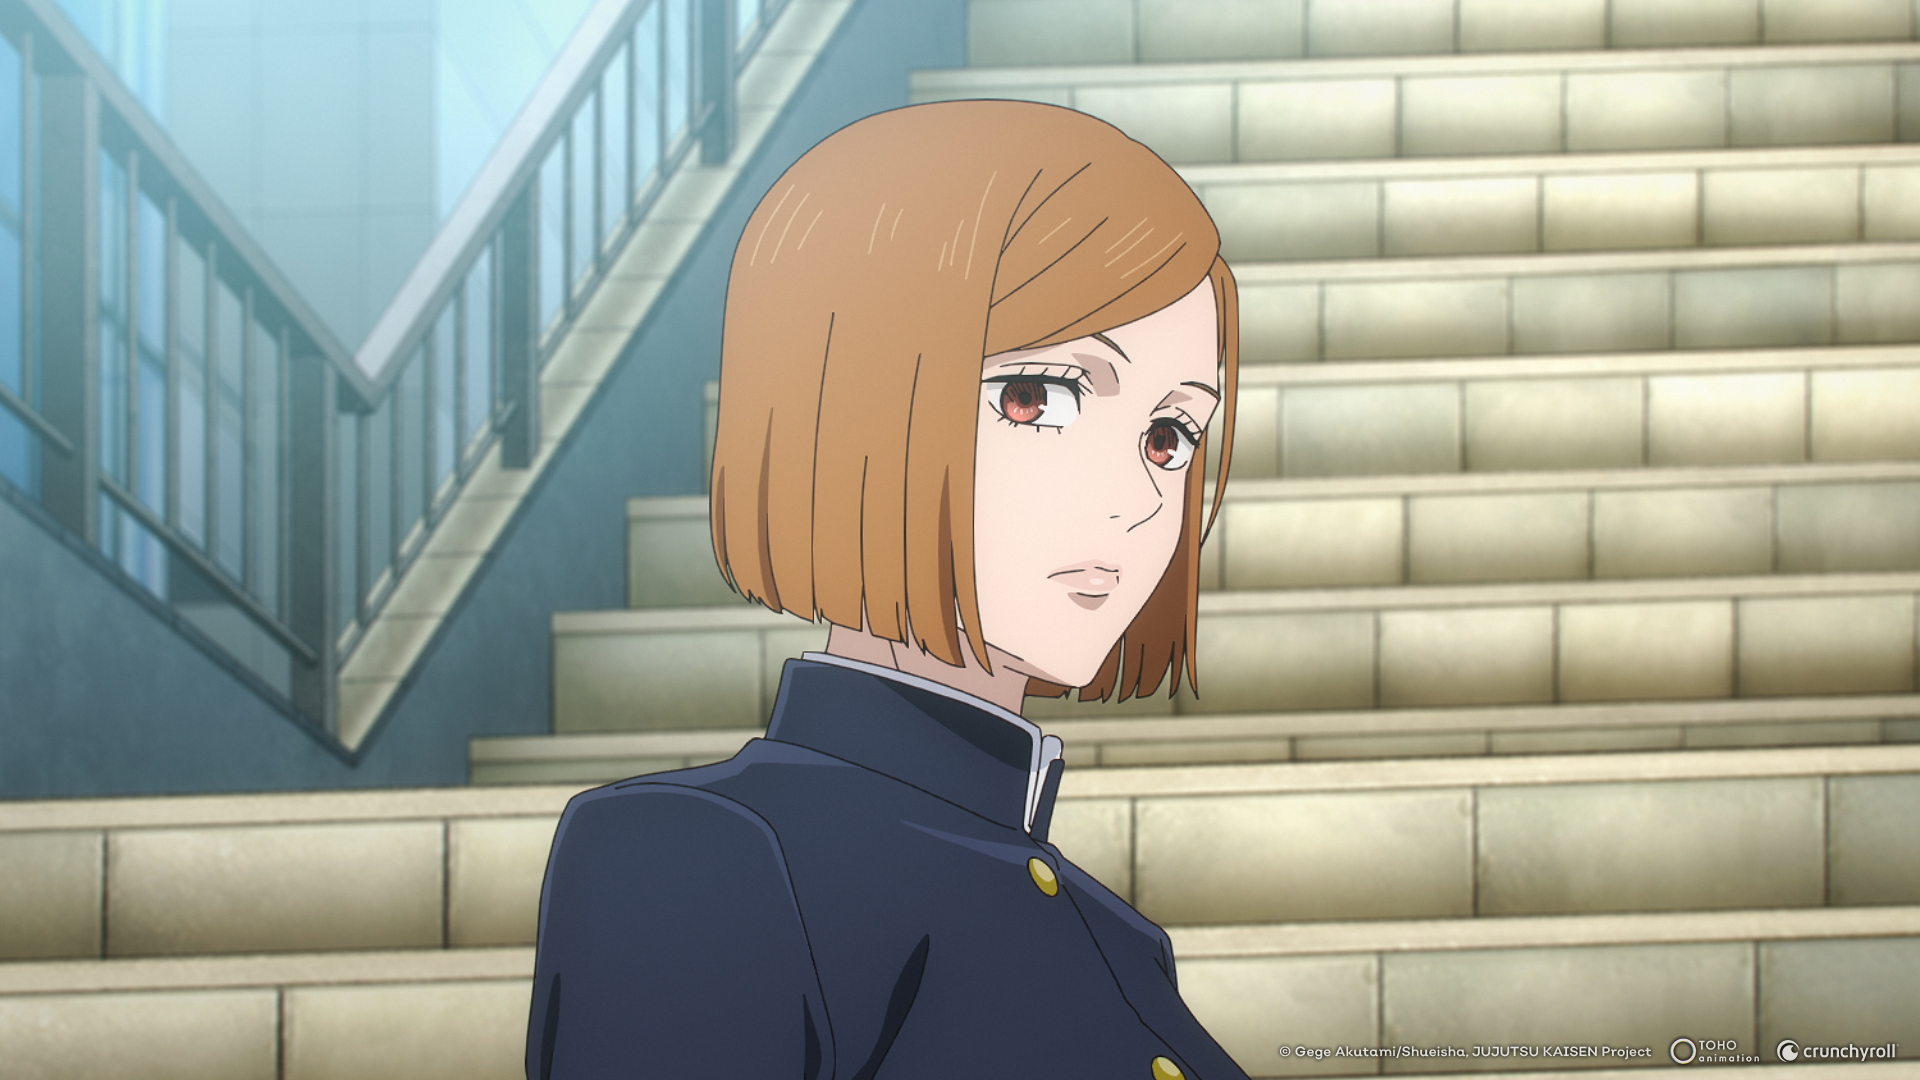 The anime character Nobara Kugisaki stands in front of stairs in the series "Jujutsu Kaisen."